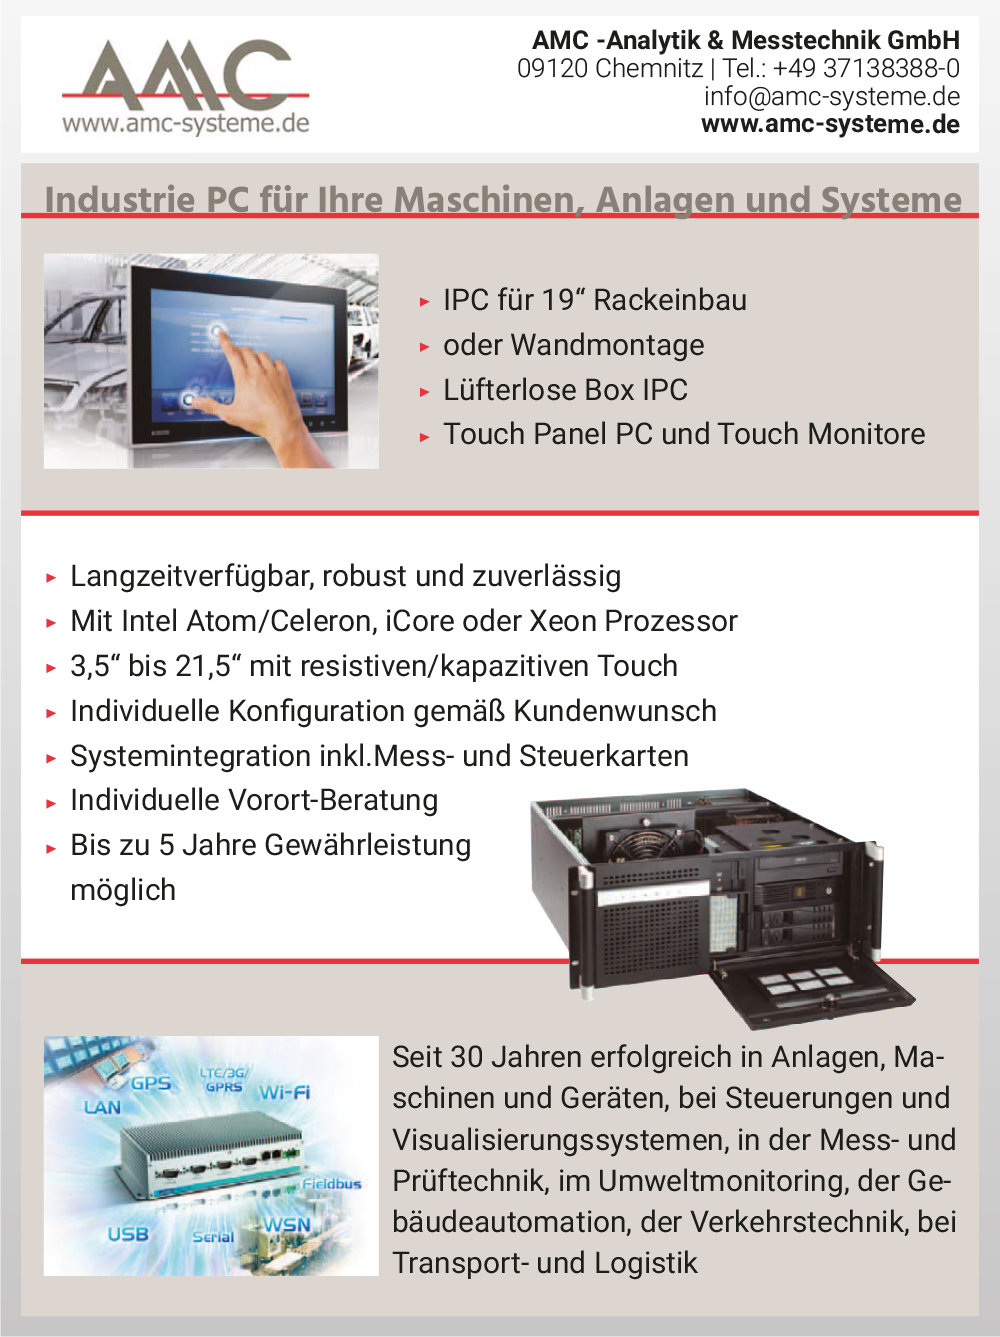 Produktübersicht – AMC Analytik & Messtechnik GmbH